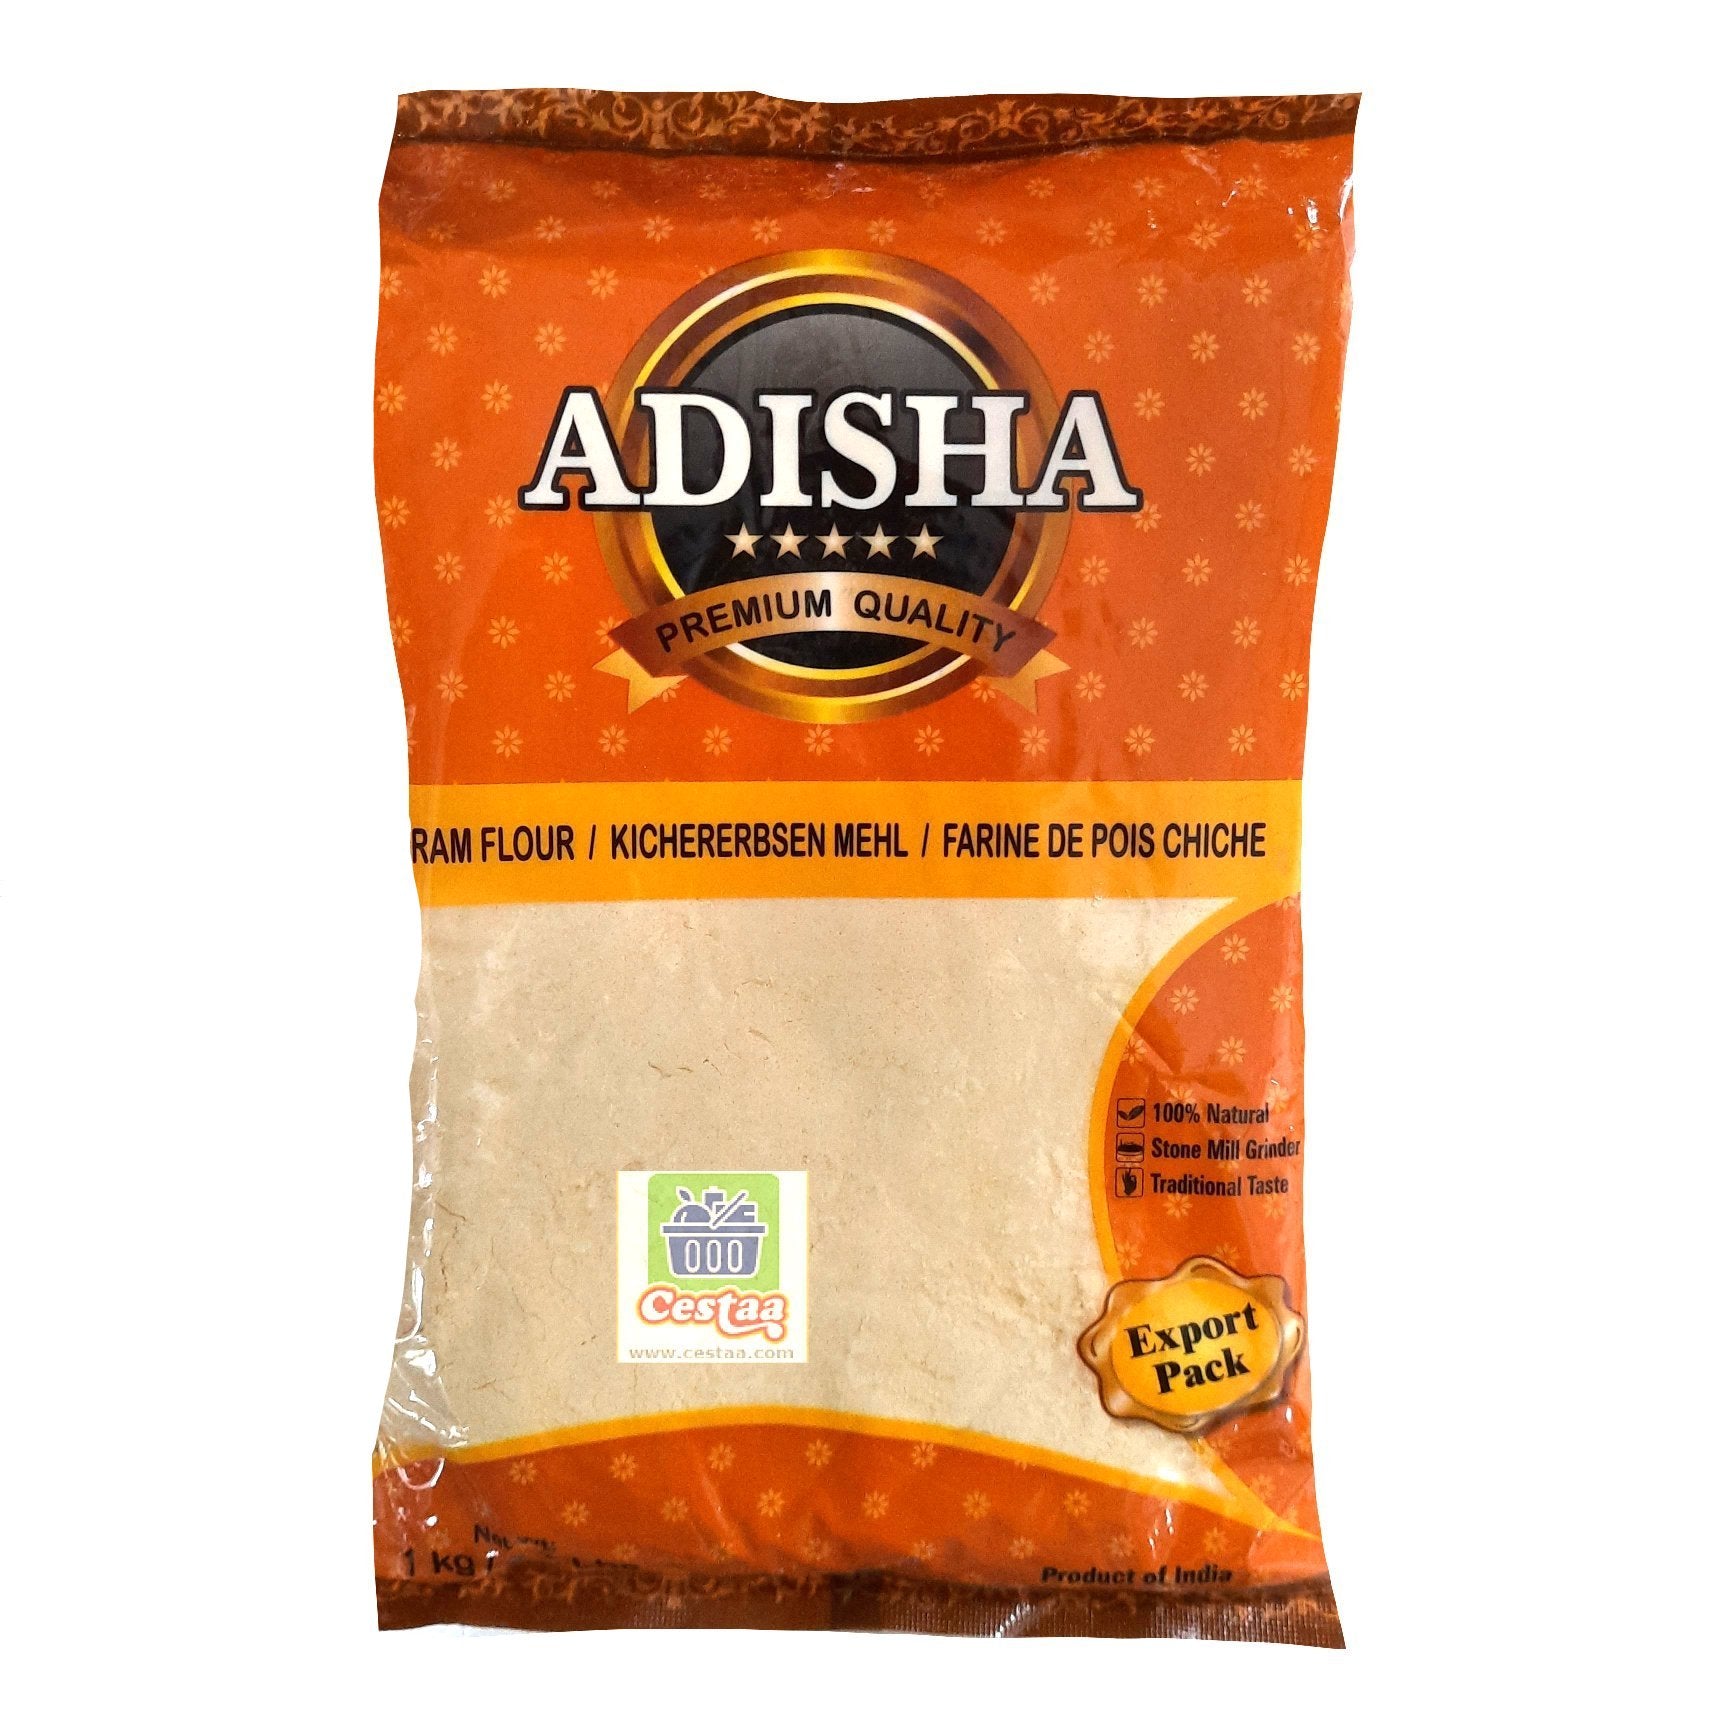 Adisha Premium quality Gram Flour (Besan) 1kg - Cestaa Retail